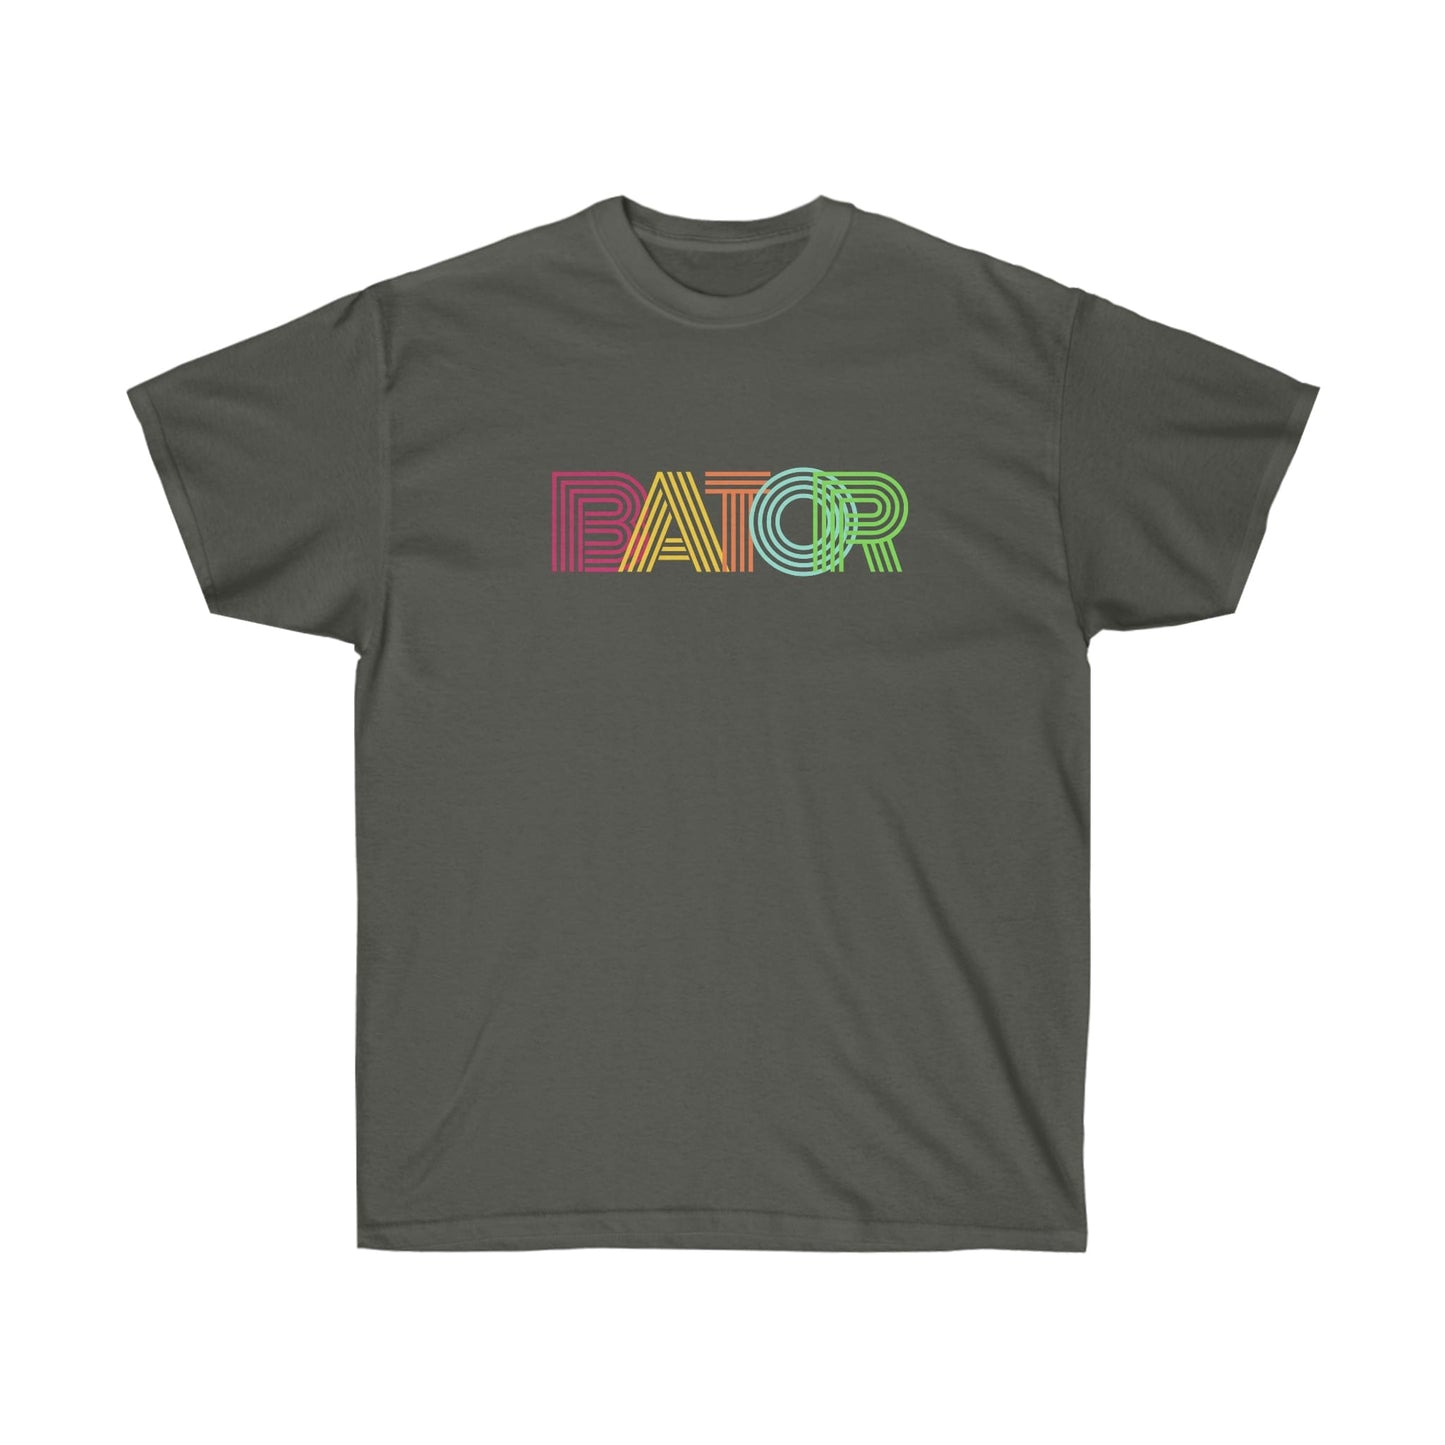 T-Shirt Charcoal / S Retro Bator LEATHERDADDY BATOR